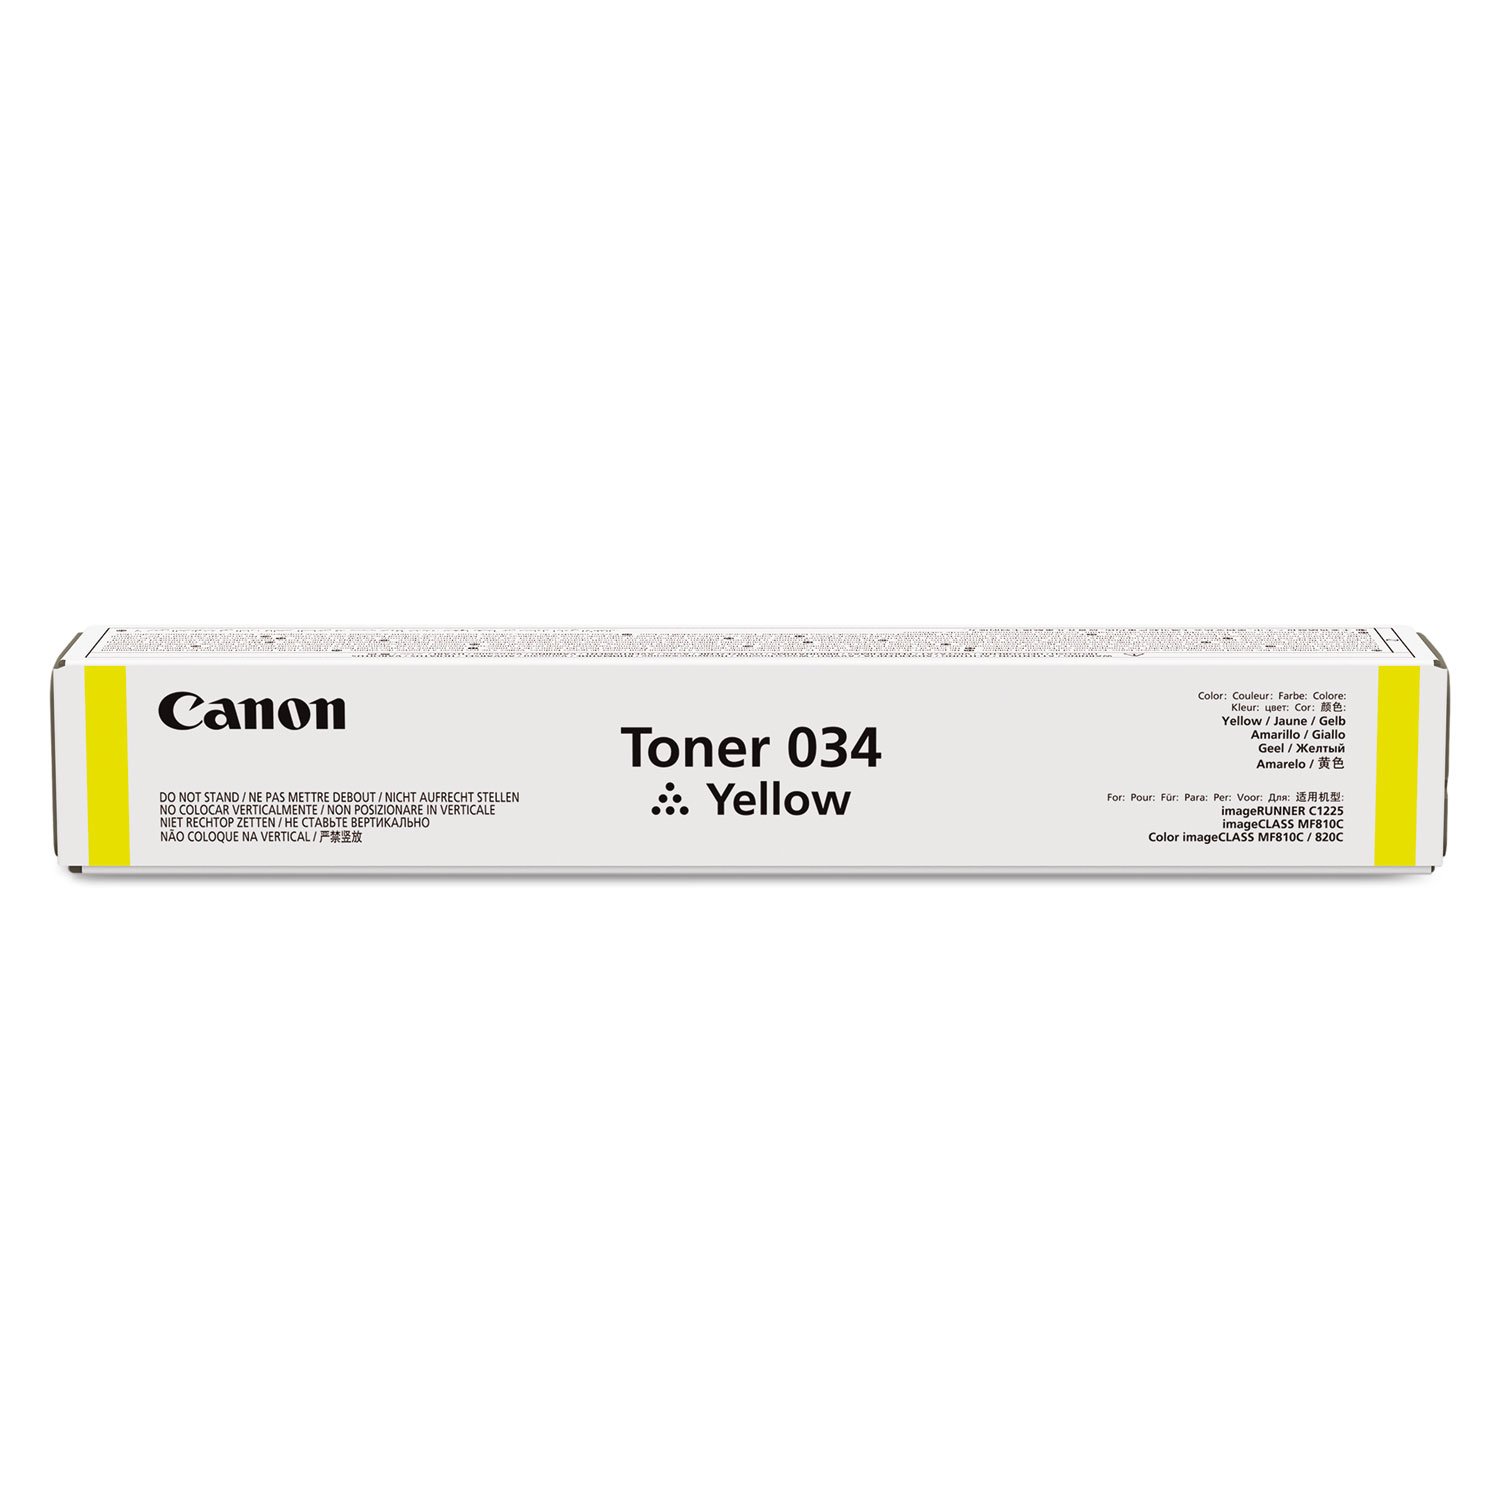  Canon 9451B001 9451B001 (034) Toner, 7300 Page-Yield, Yellow (CNM9451B001) 